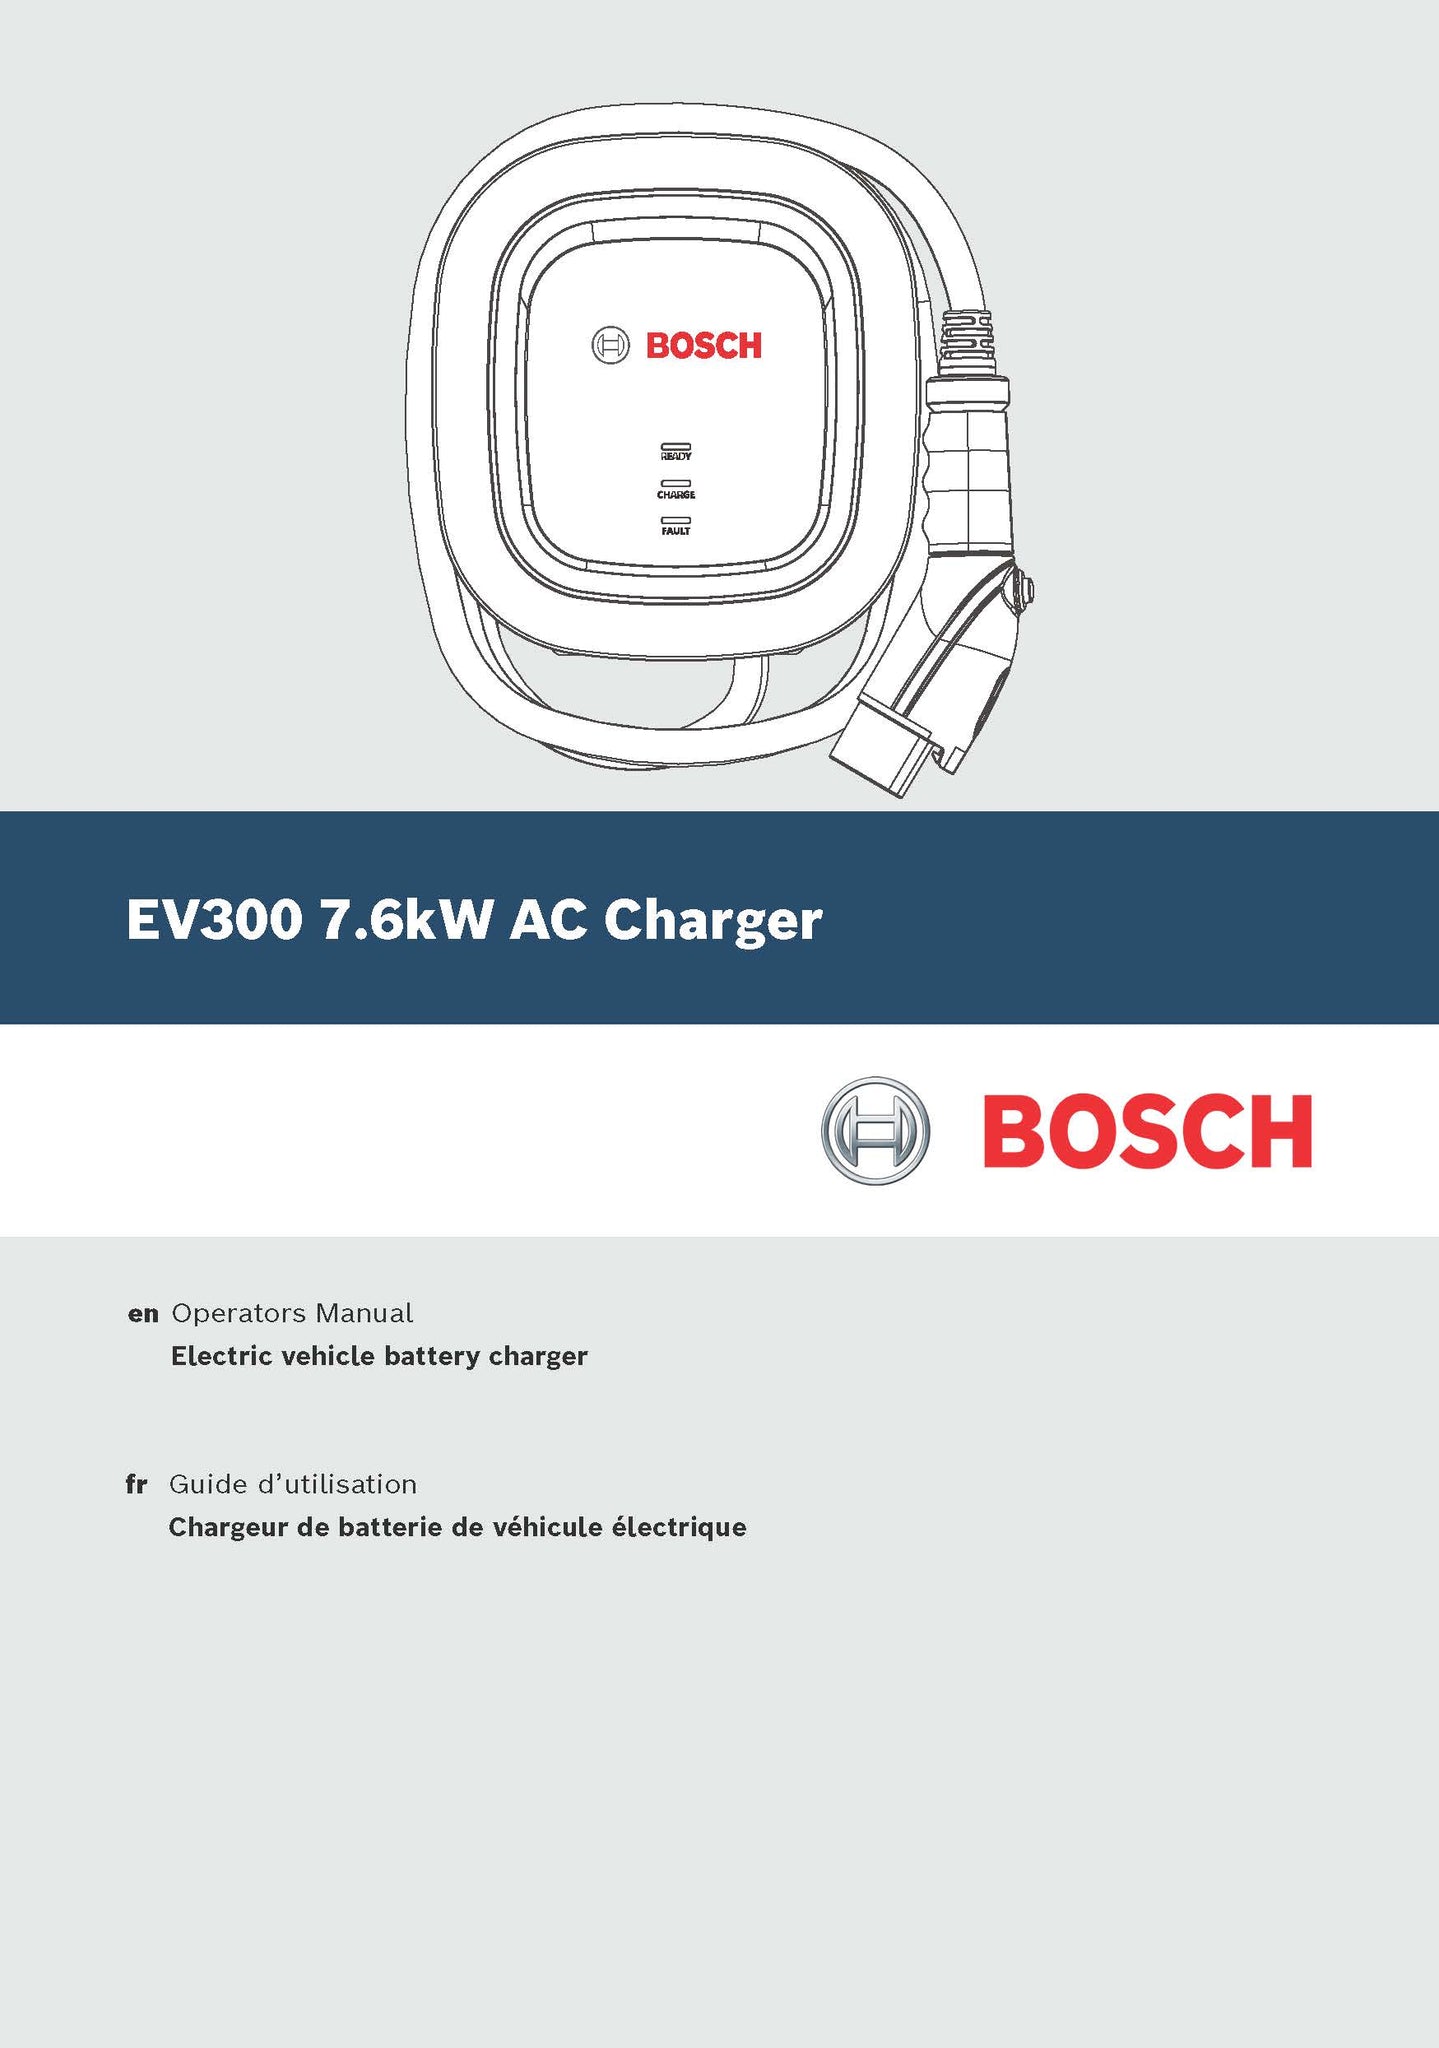 Bosch EV300 Tesla Model X Wallbox Level 2 32A 240V 7.6kW EV Charging  Station NEMA 14-50